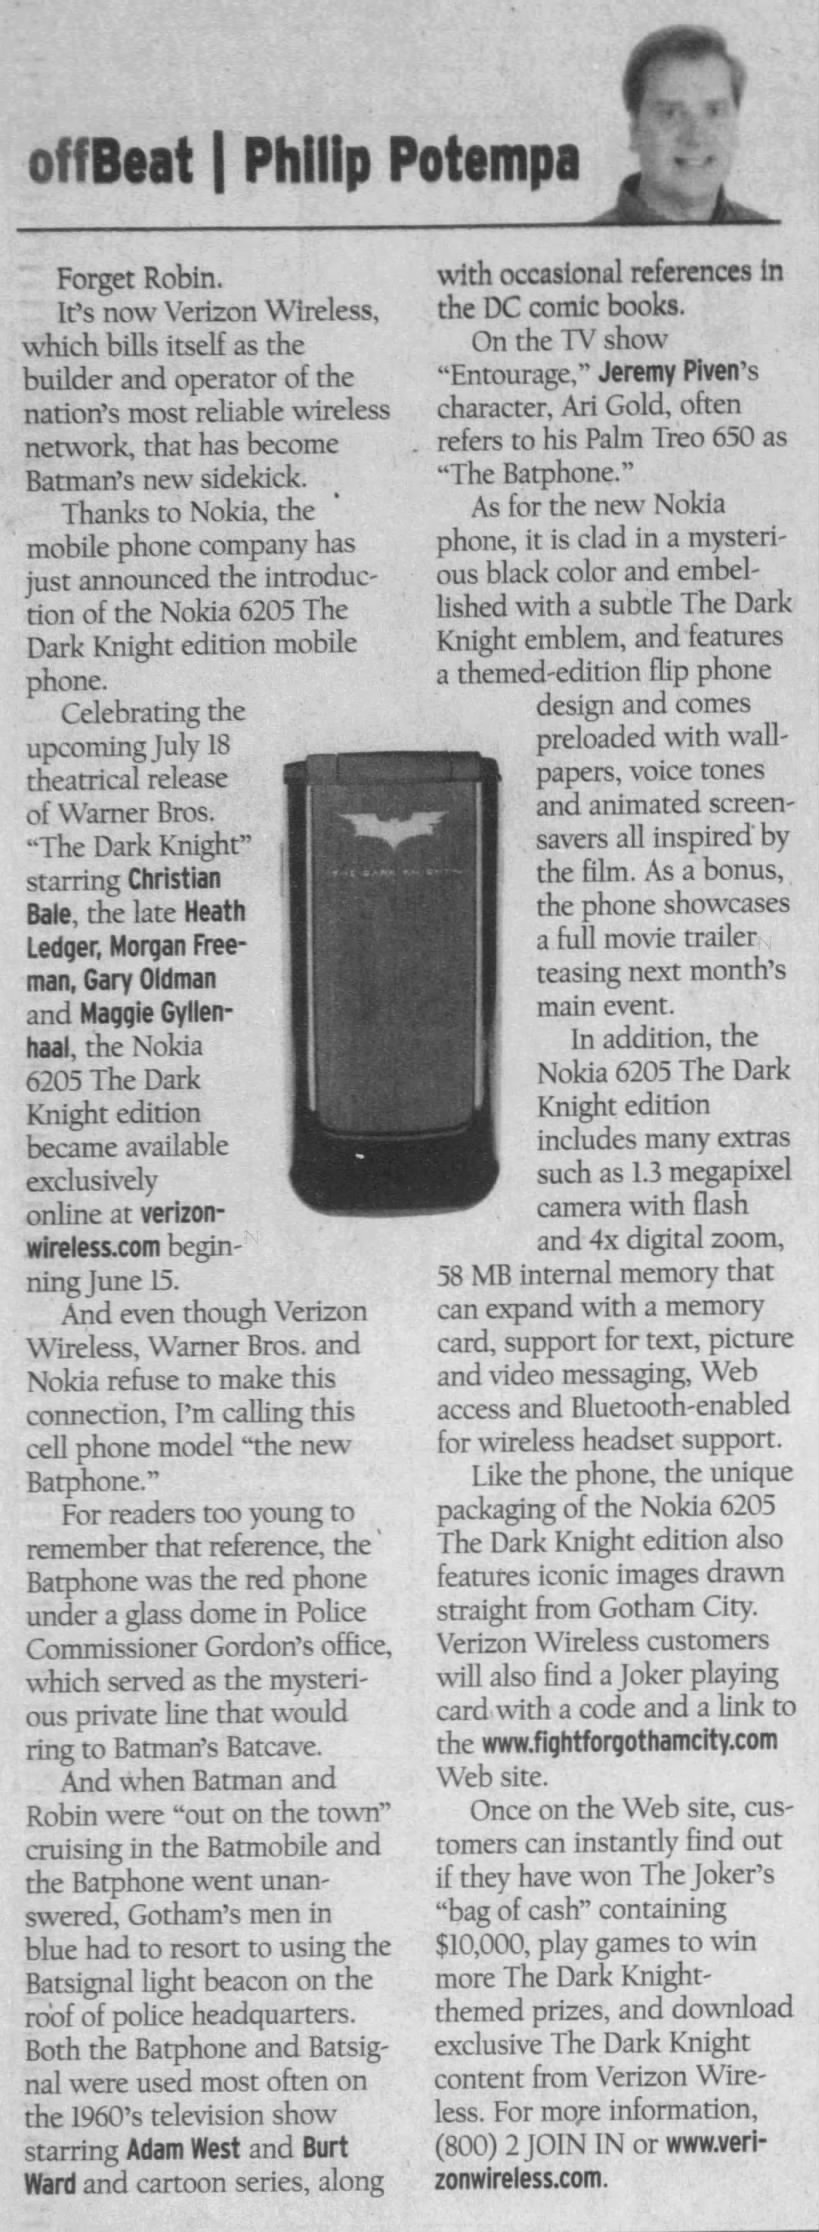 offBeat Verizon Wireless Batphone